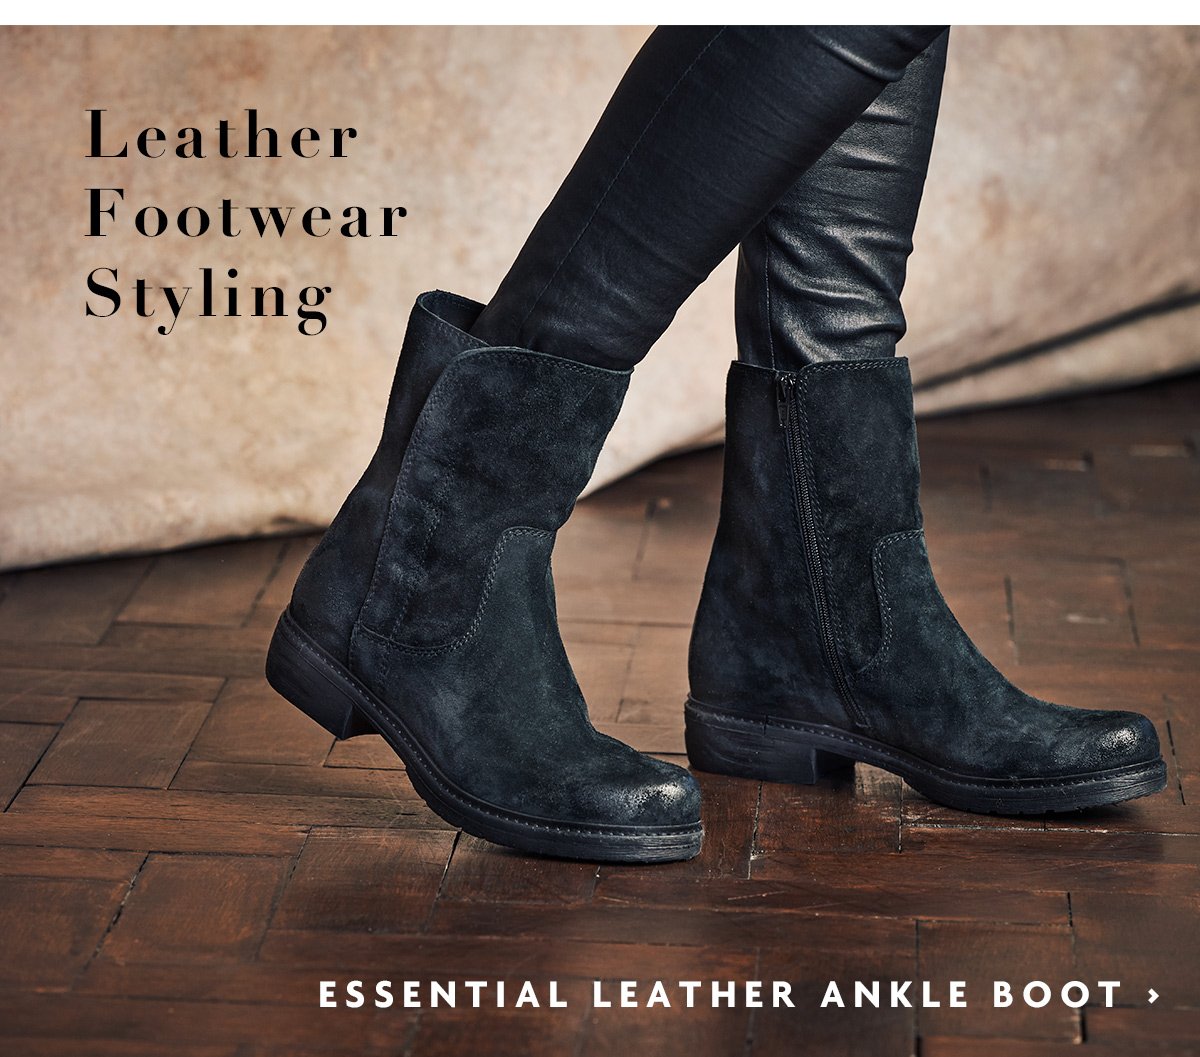 Celtic \u0026 Co: Stylish Leather Footwear 